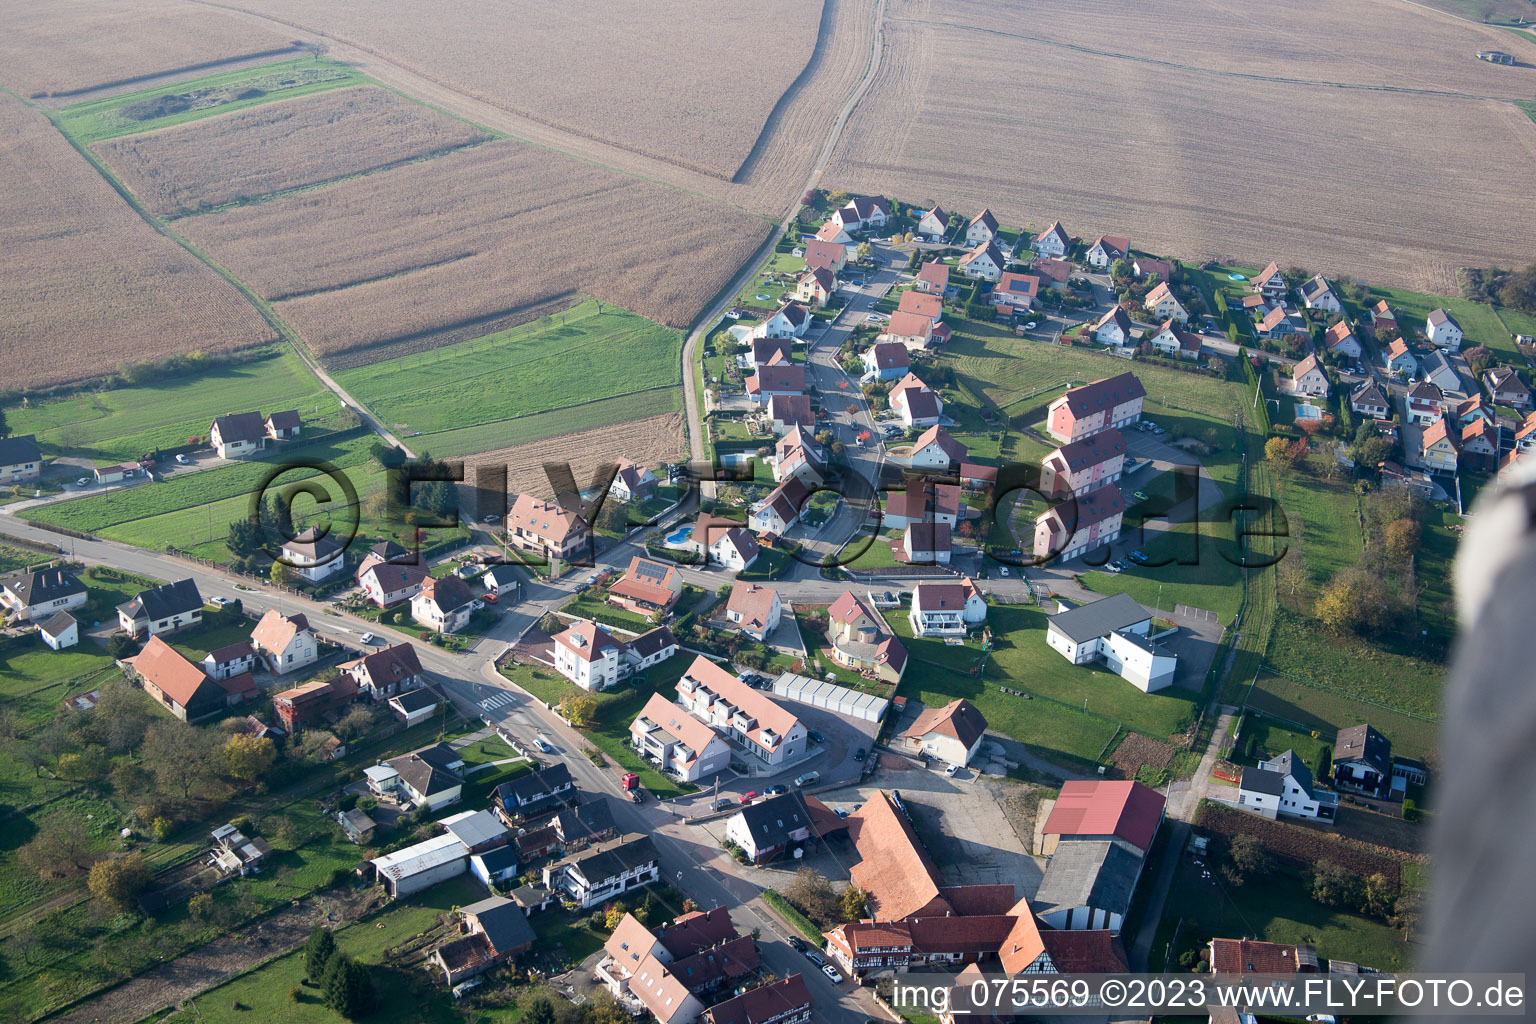 Soultz-sous-Forêts im Bundesland Bas-Rhin, Frankreich aus der Luft betrachtet